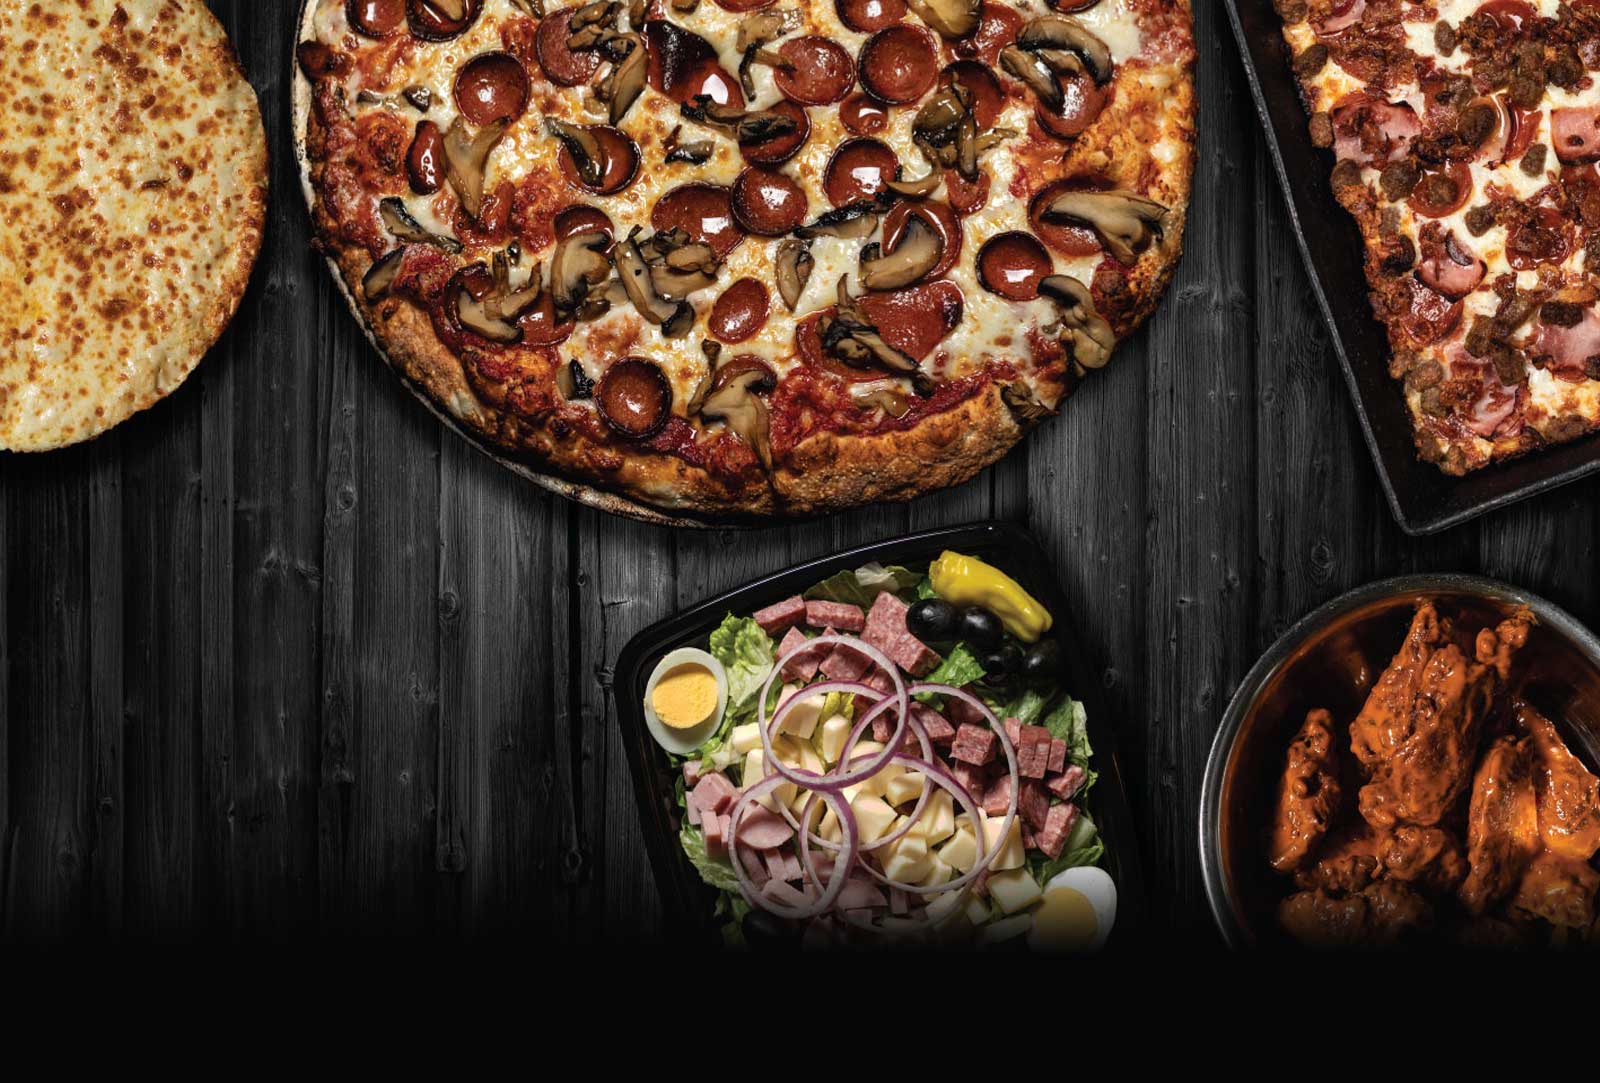 Speedy Pizza, Sub, & App Delivery Near Detroit | Open Late